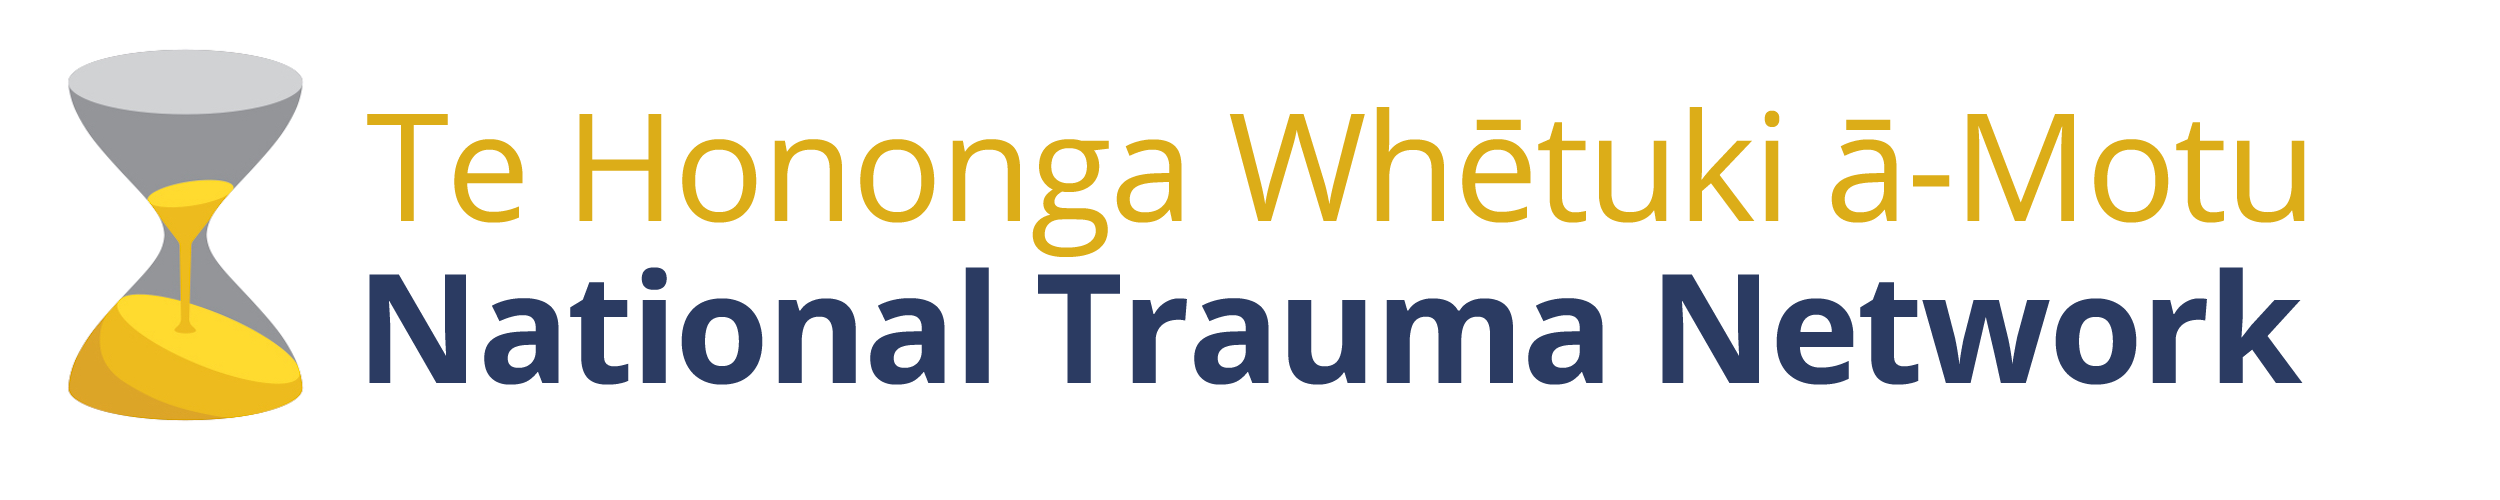 National Trauma Network